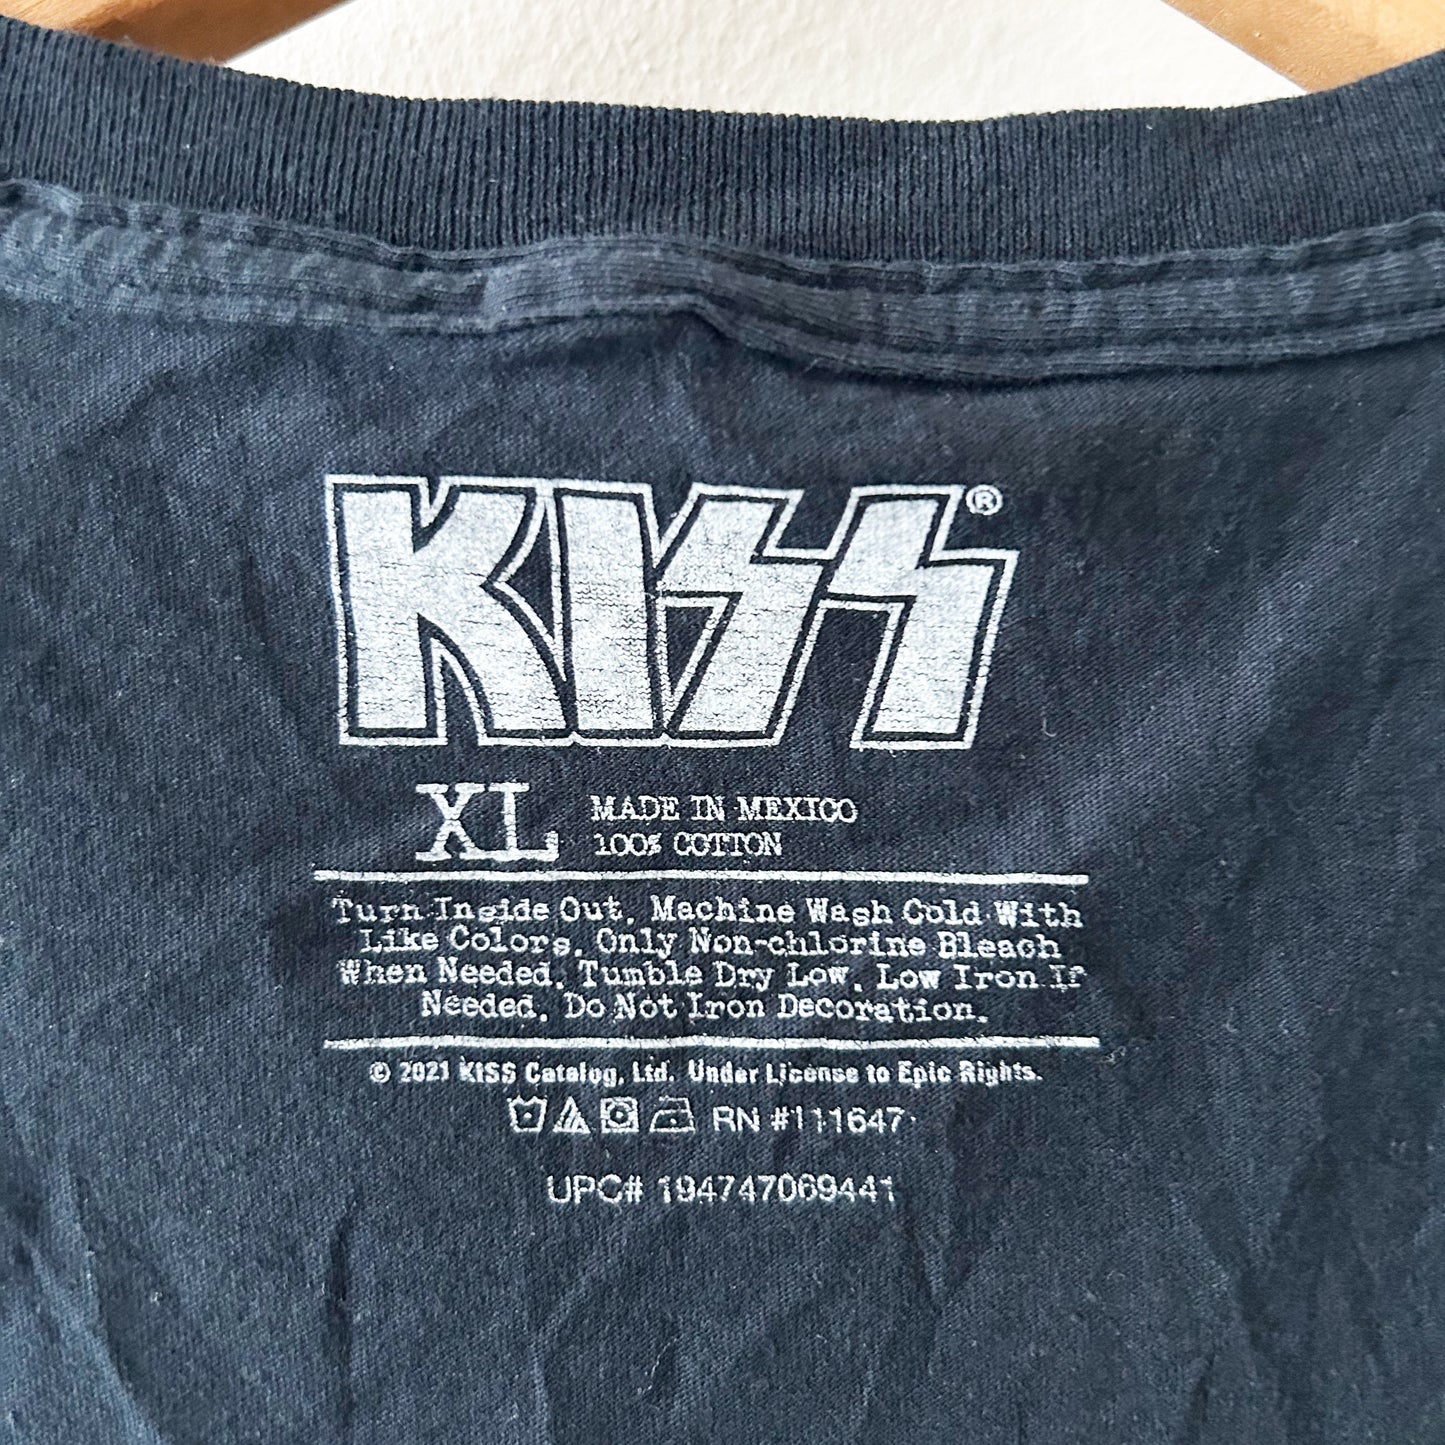 KISS World Tour'77 tee